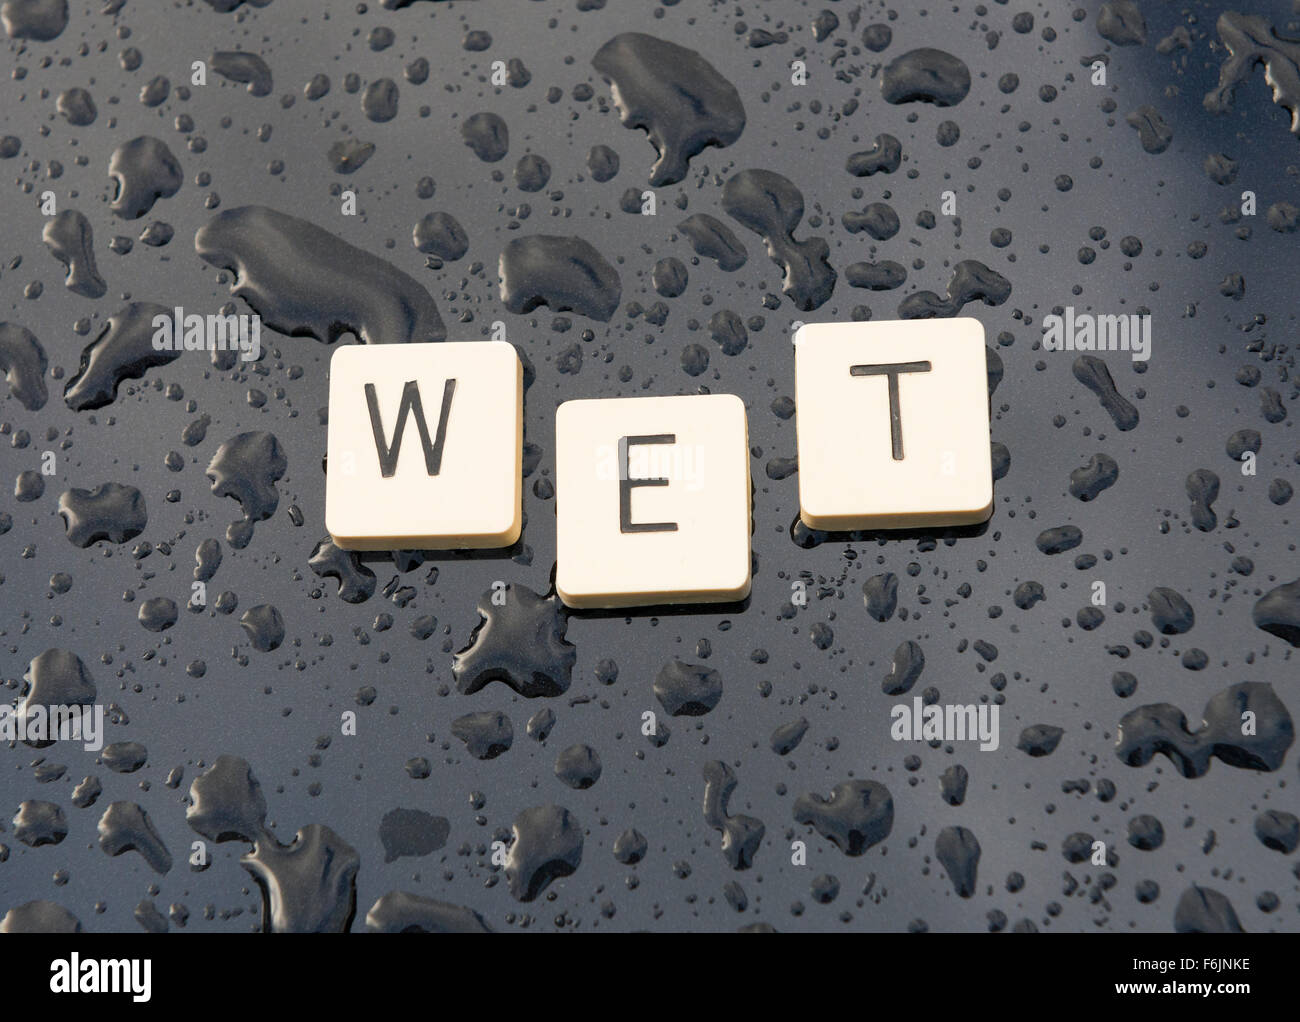 'Wet' spelt out on a rain soaked car bonnet. Stock Photo